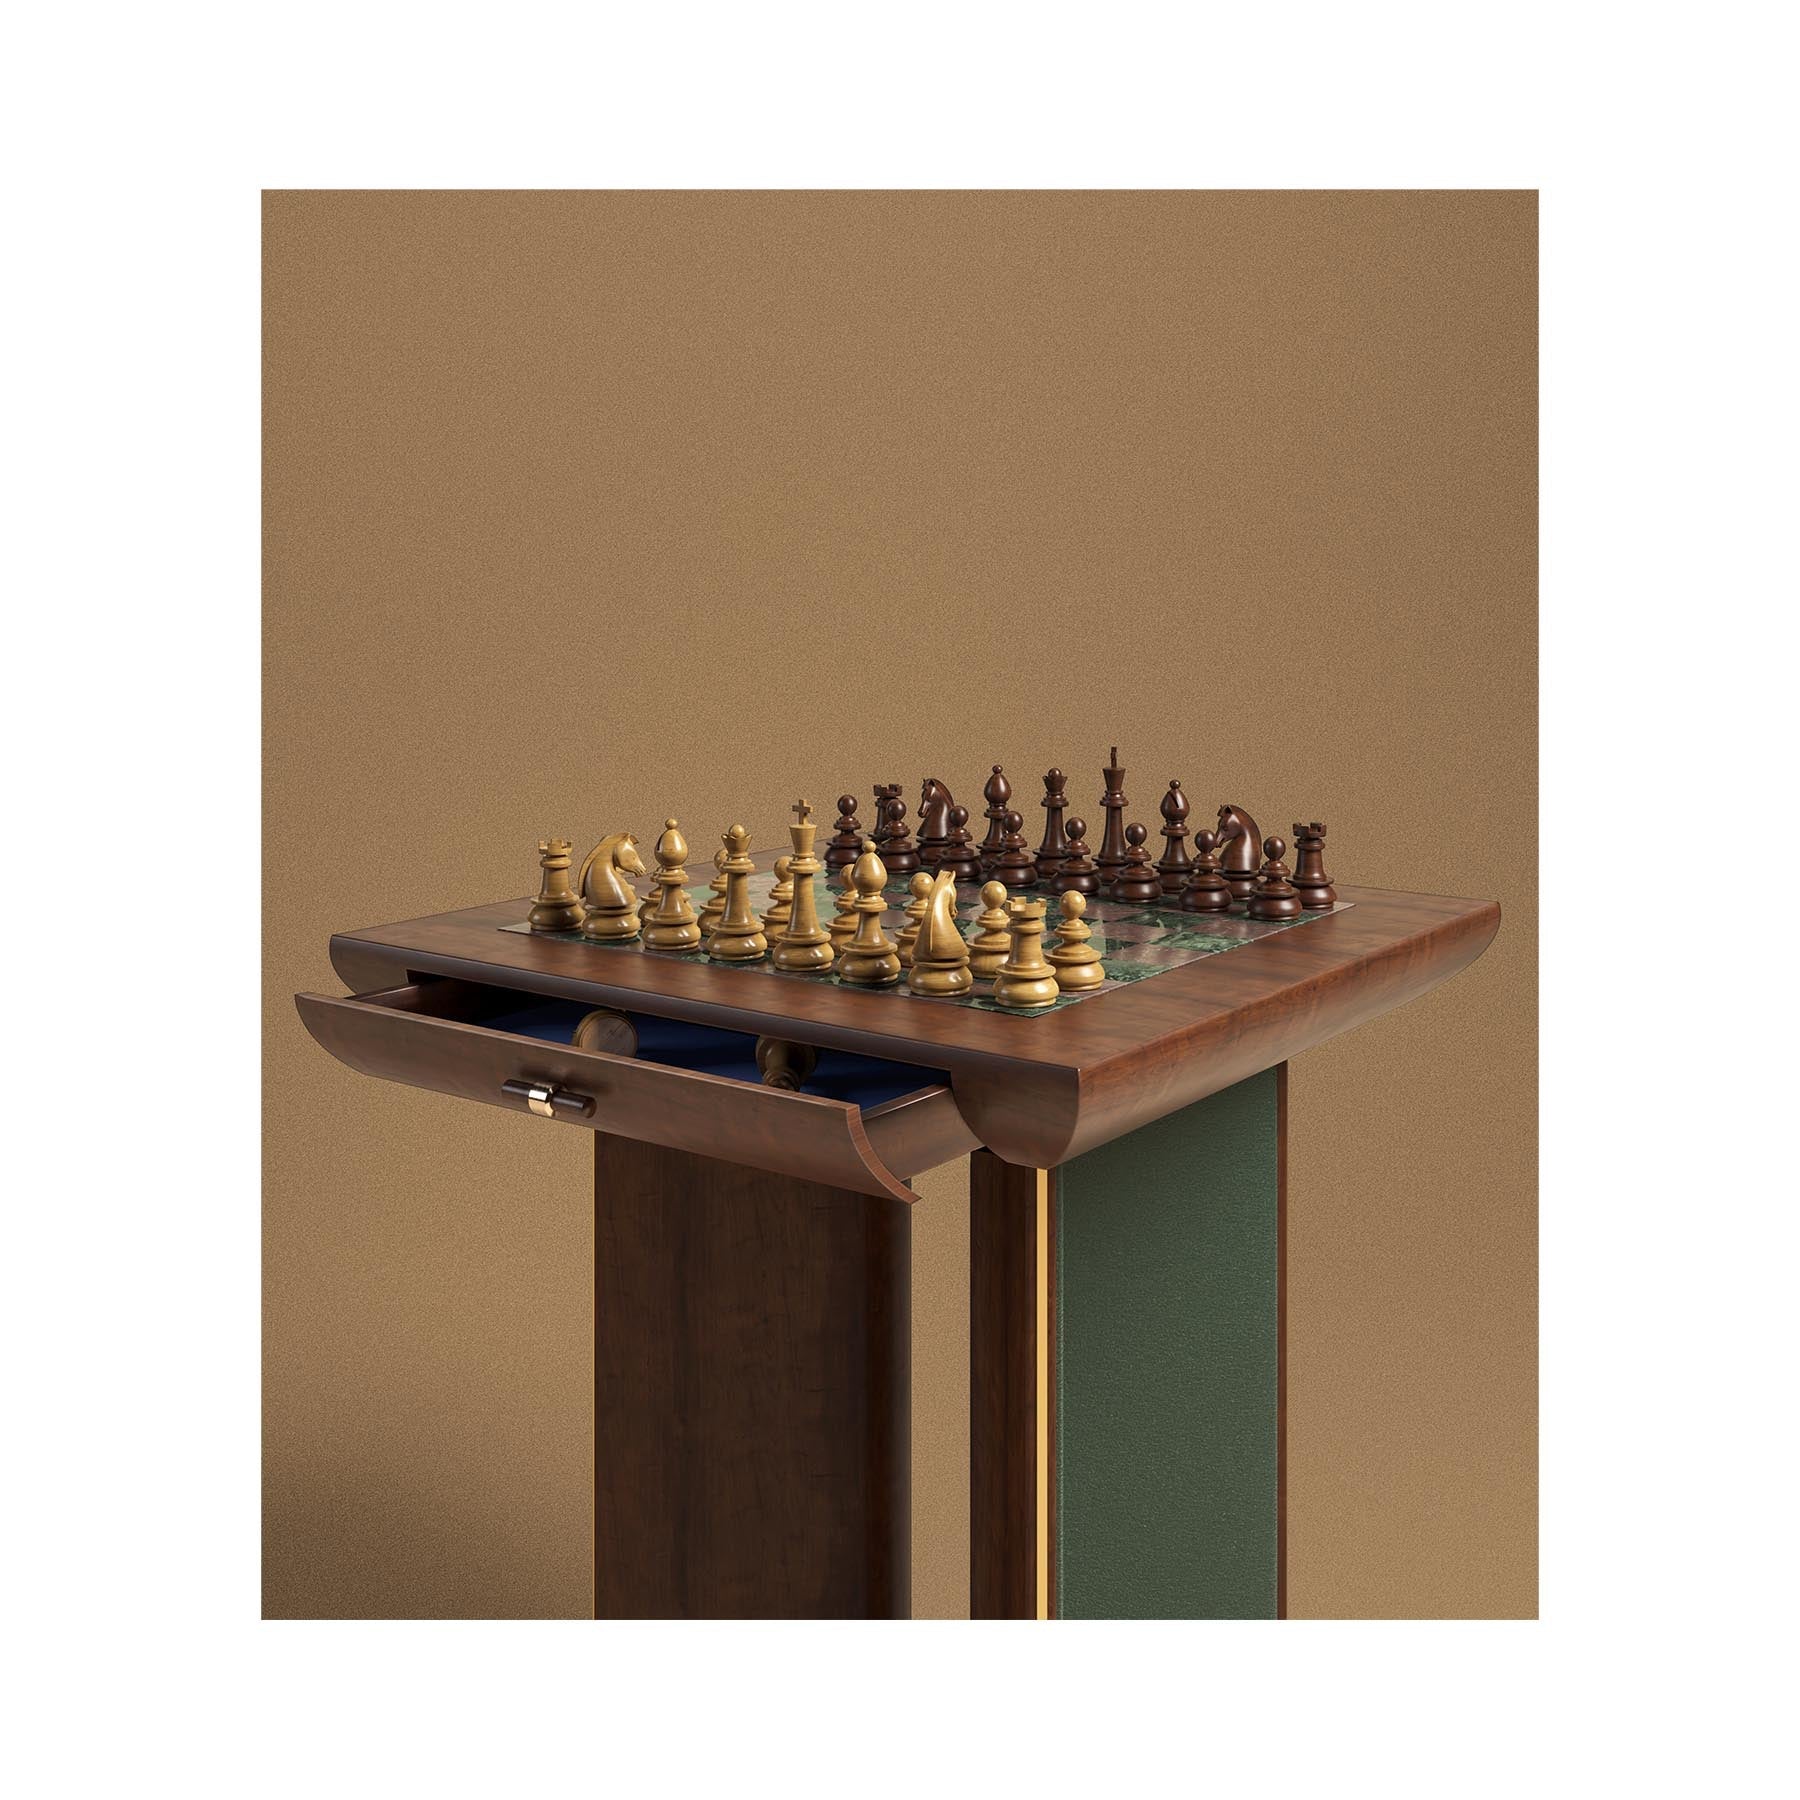 HOWARD - CHESS TABLE | Modern Furniture + Decor